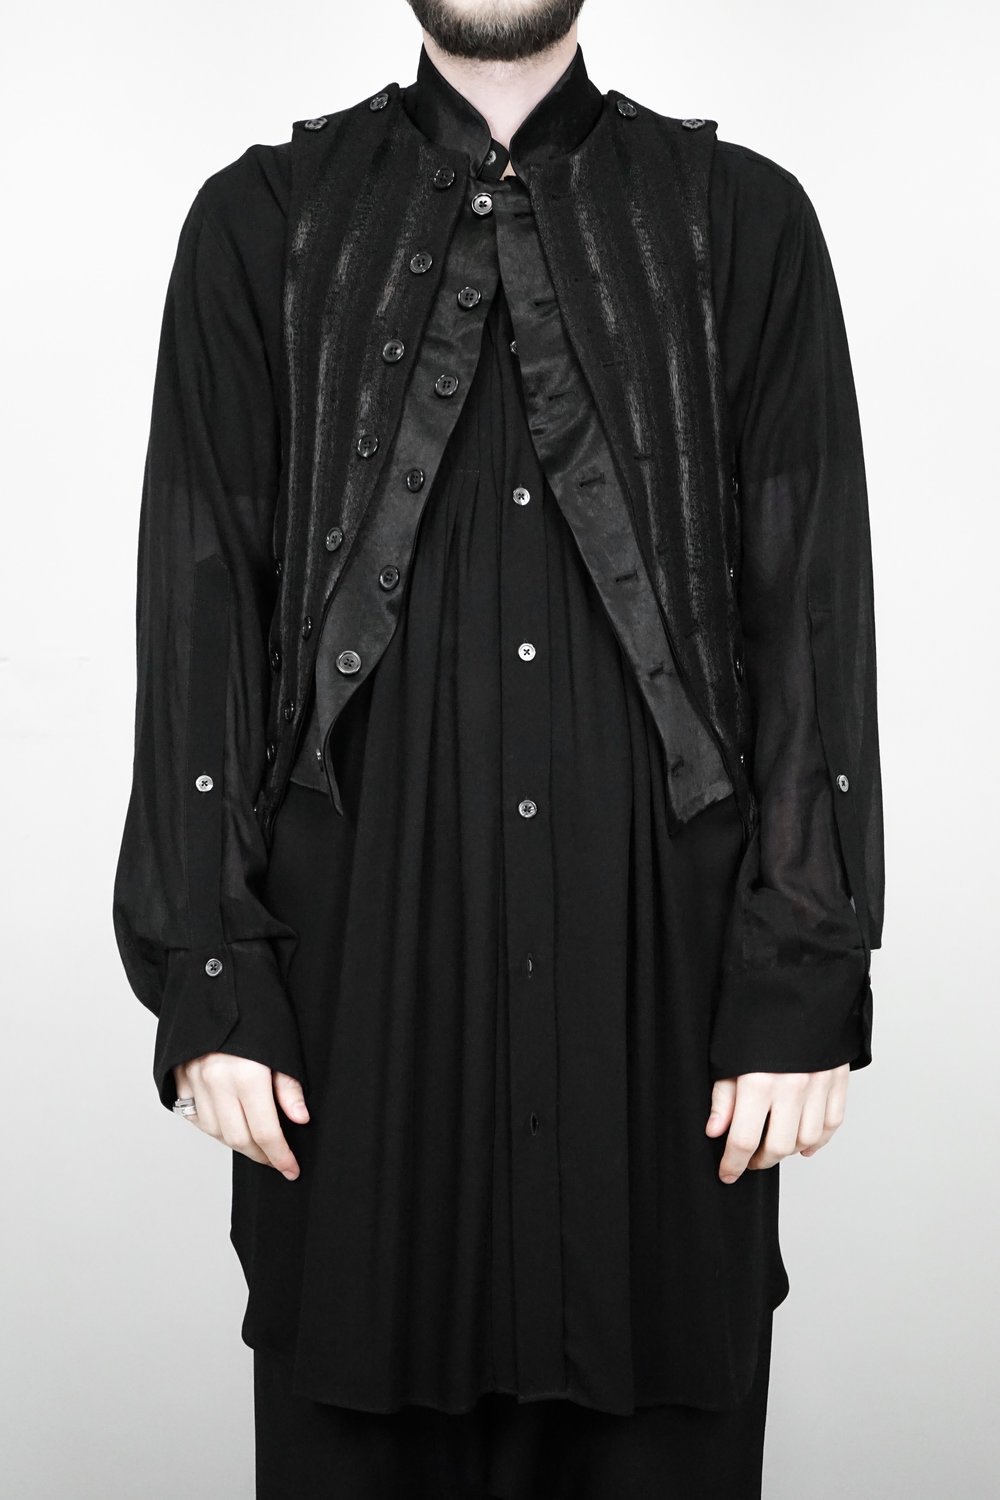 Ann Demeulemeester – Mens – Detachable Waistcoat – Black – Wool / Actate – Front Button Closing